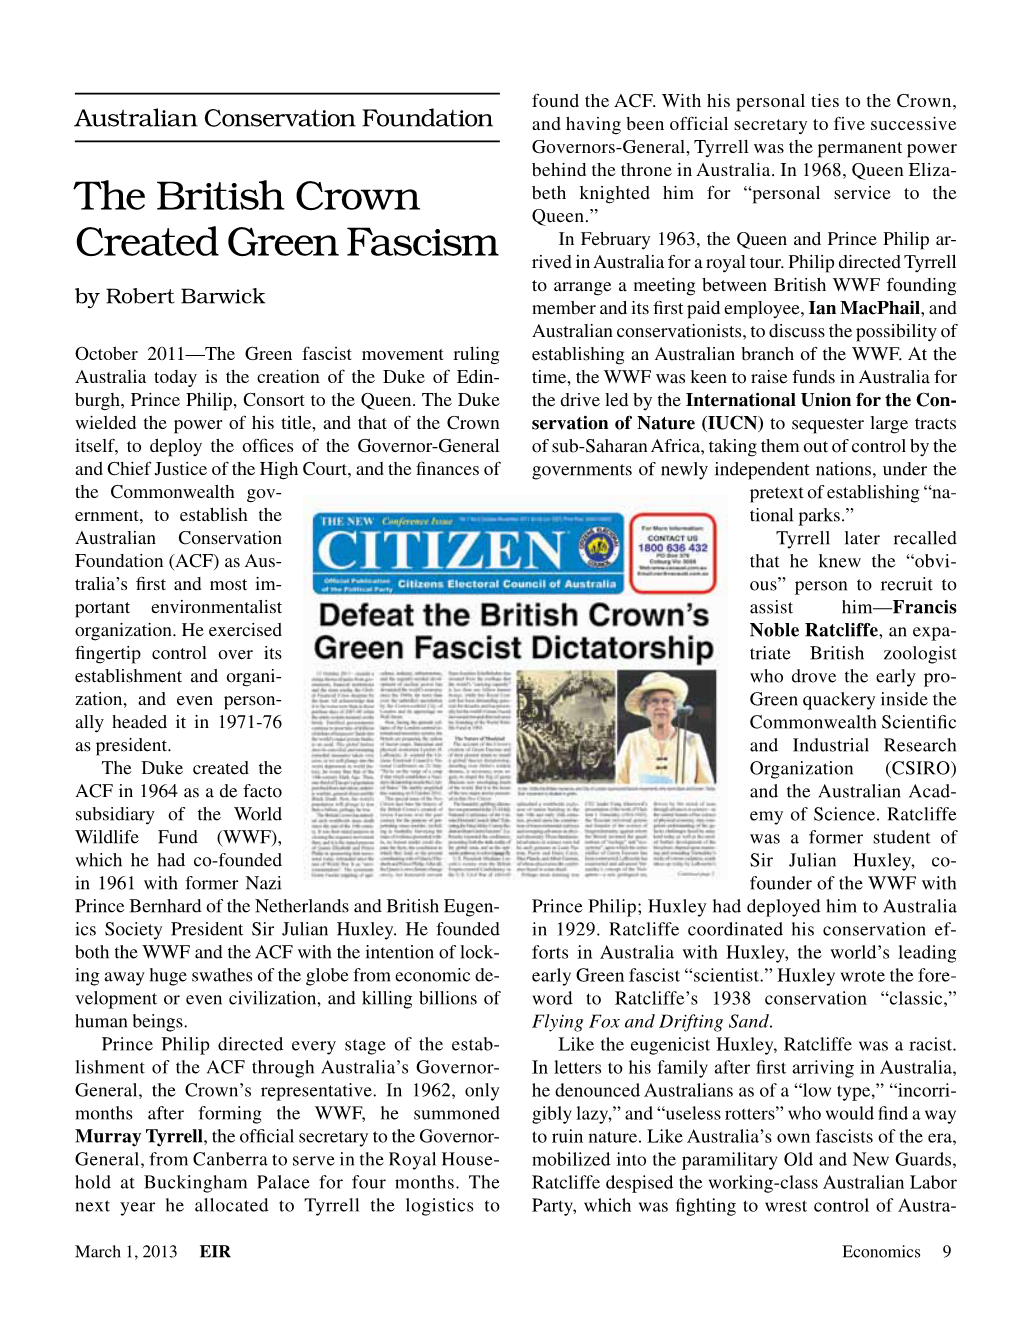 The British Crown Created Green Fascism